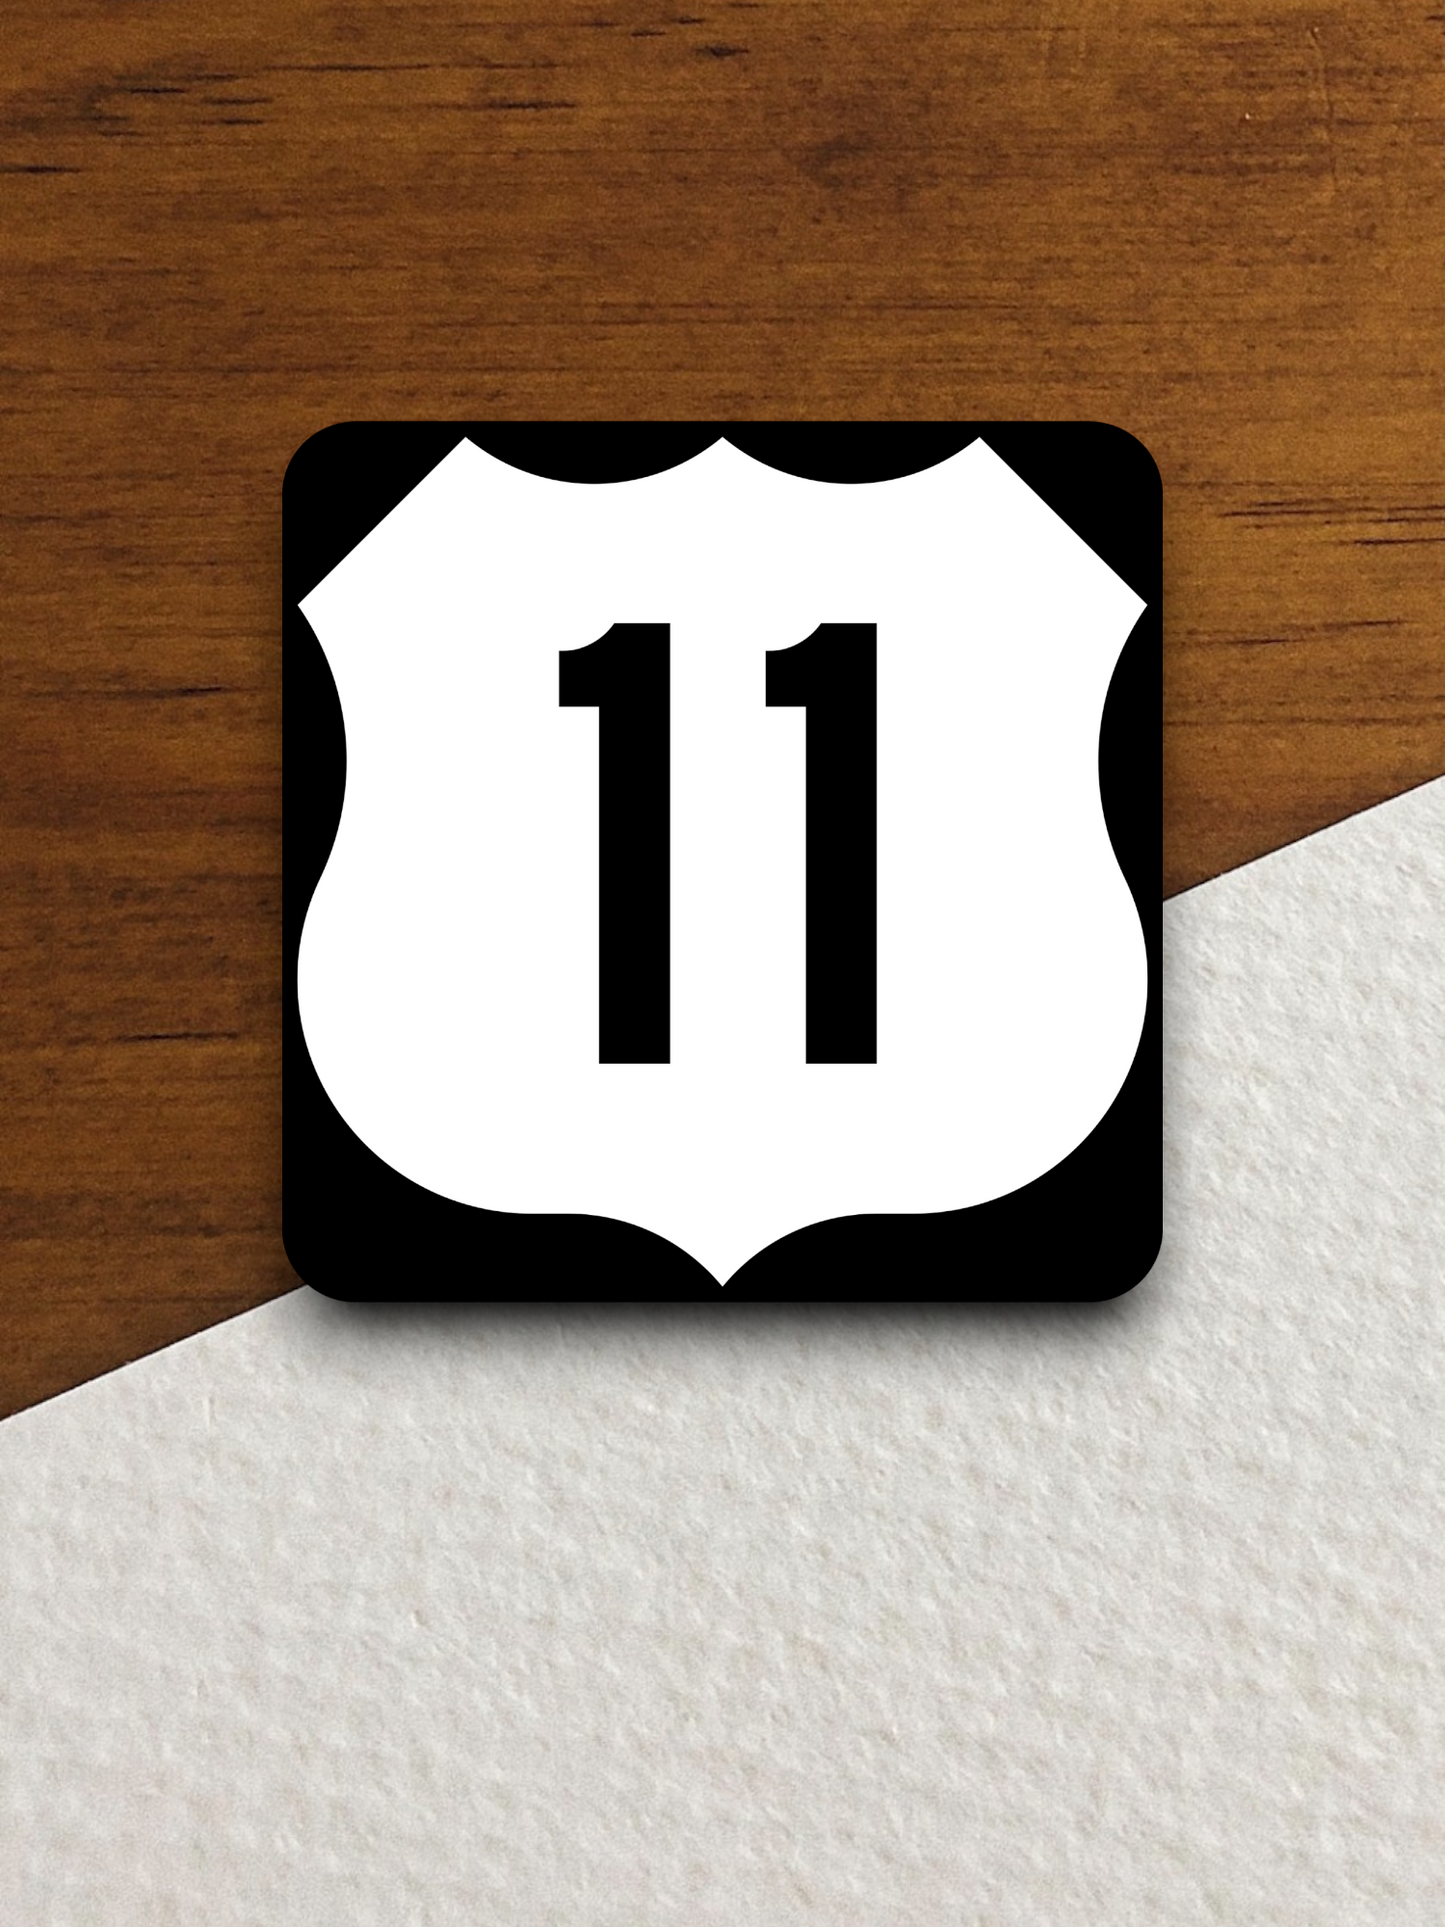 U.S. Route 11 Road Sign Sticker